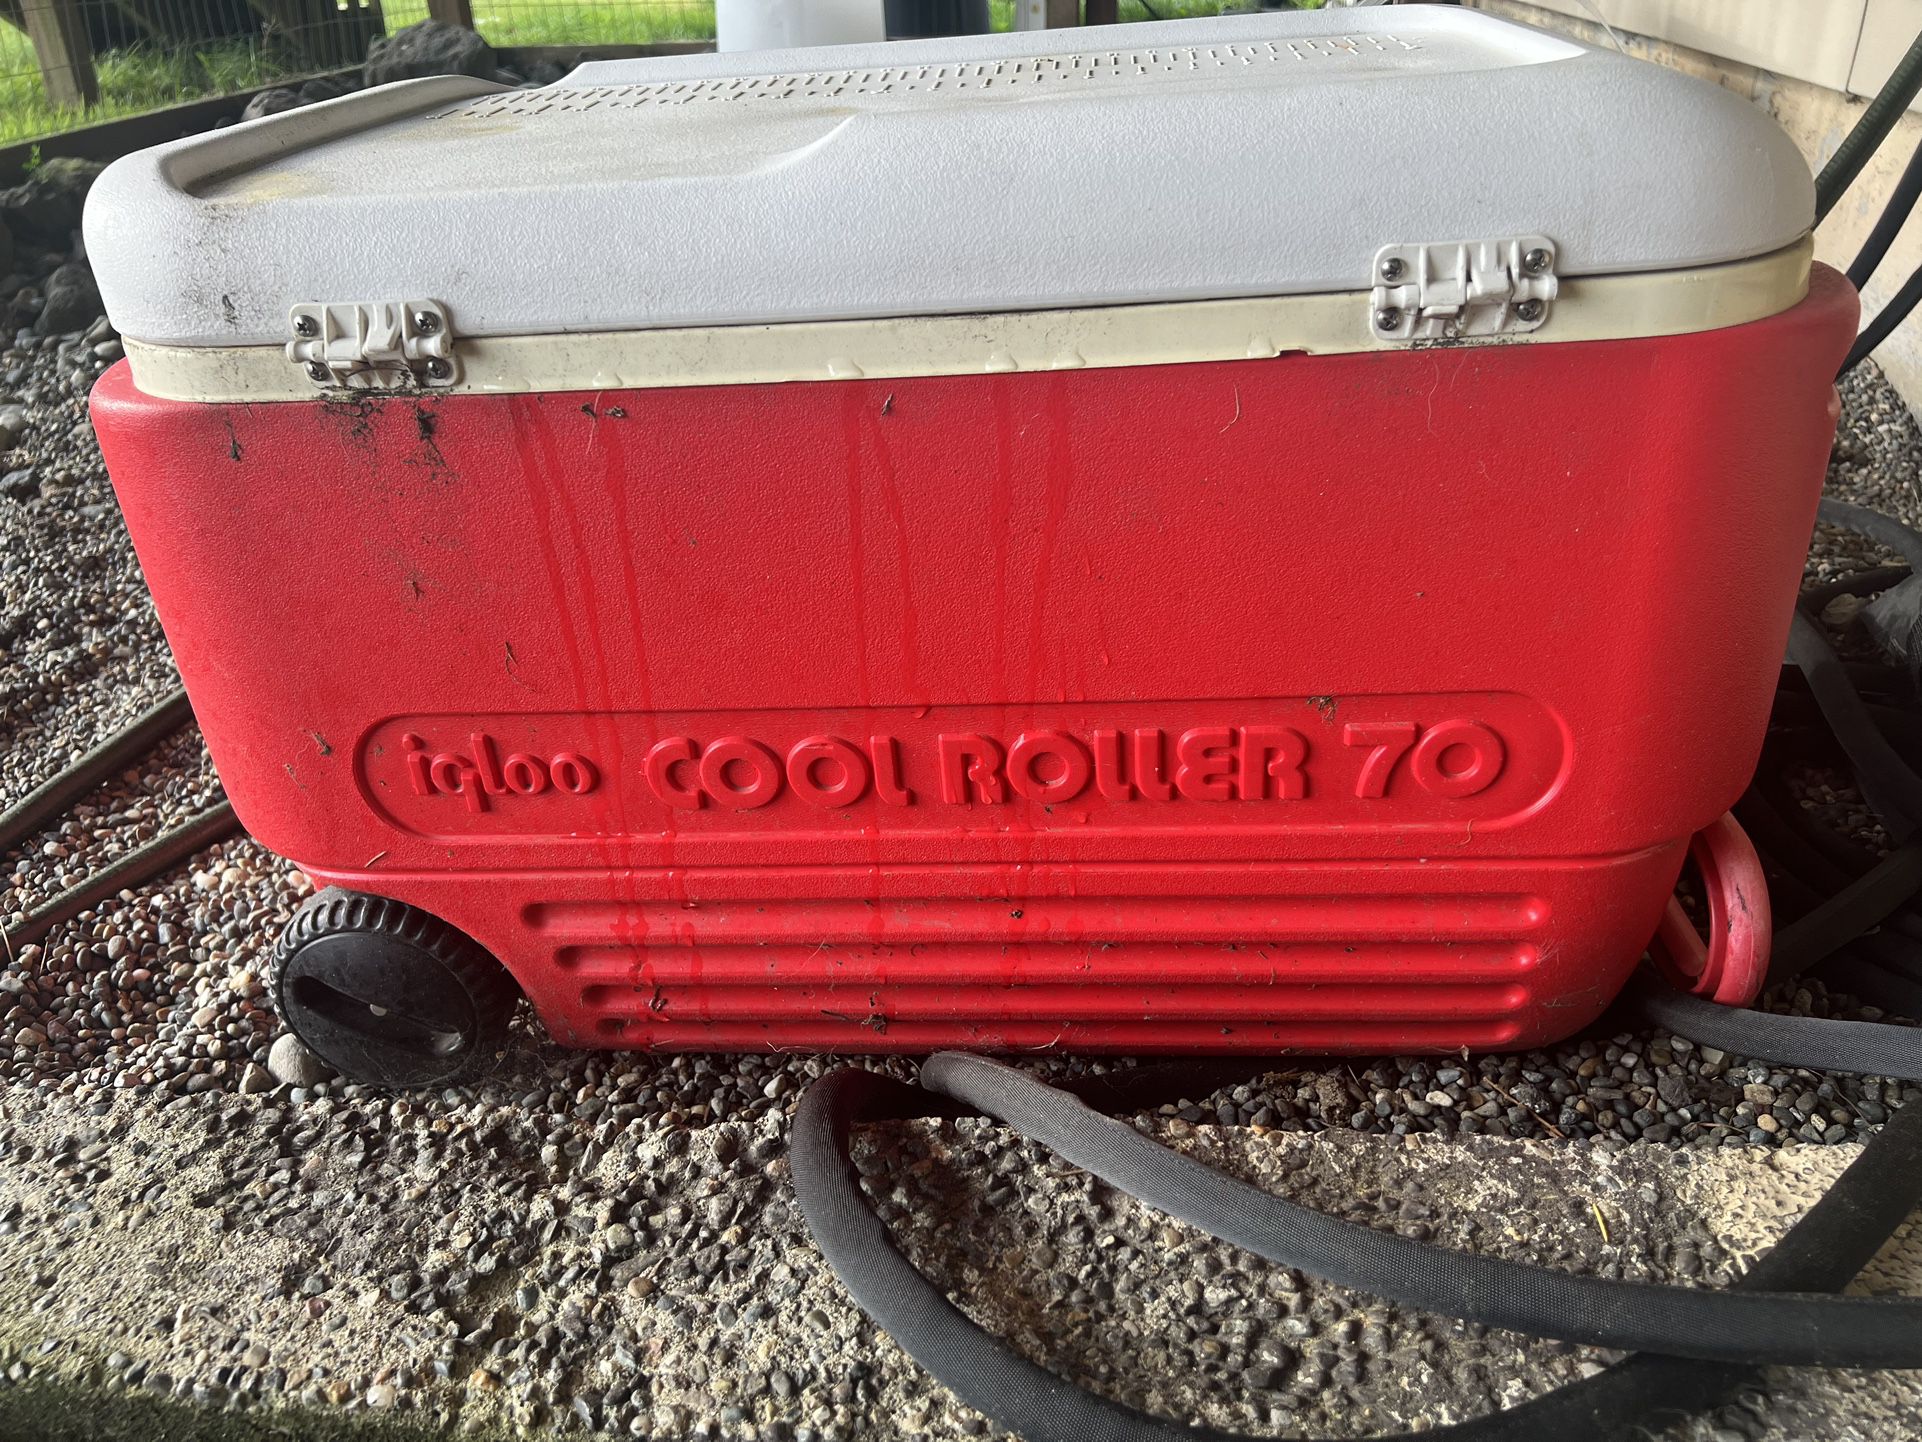 Igloo Cooler With Wheels 